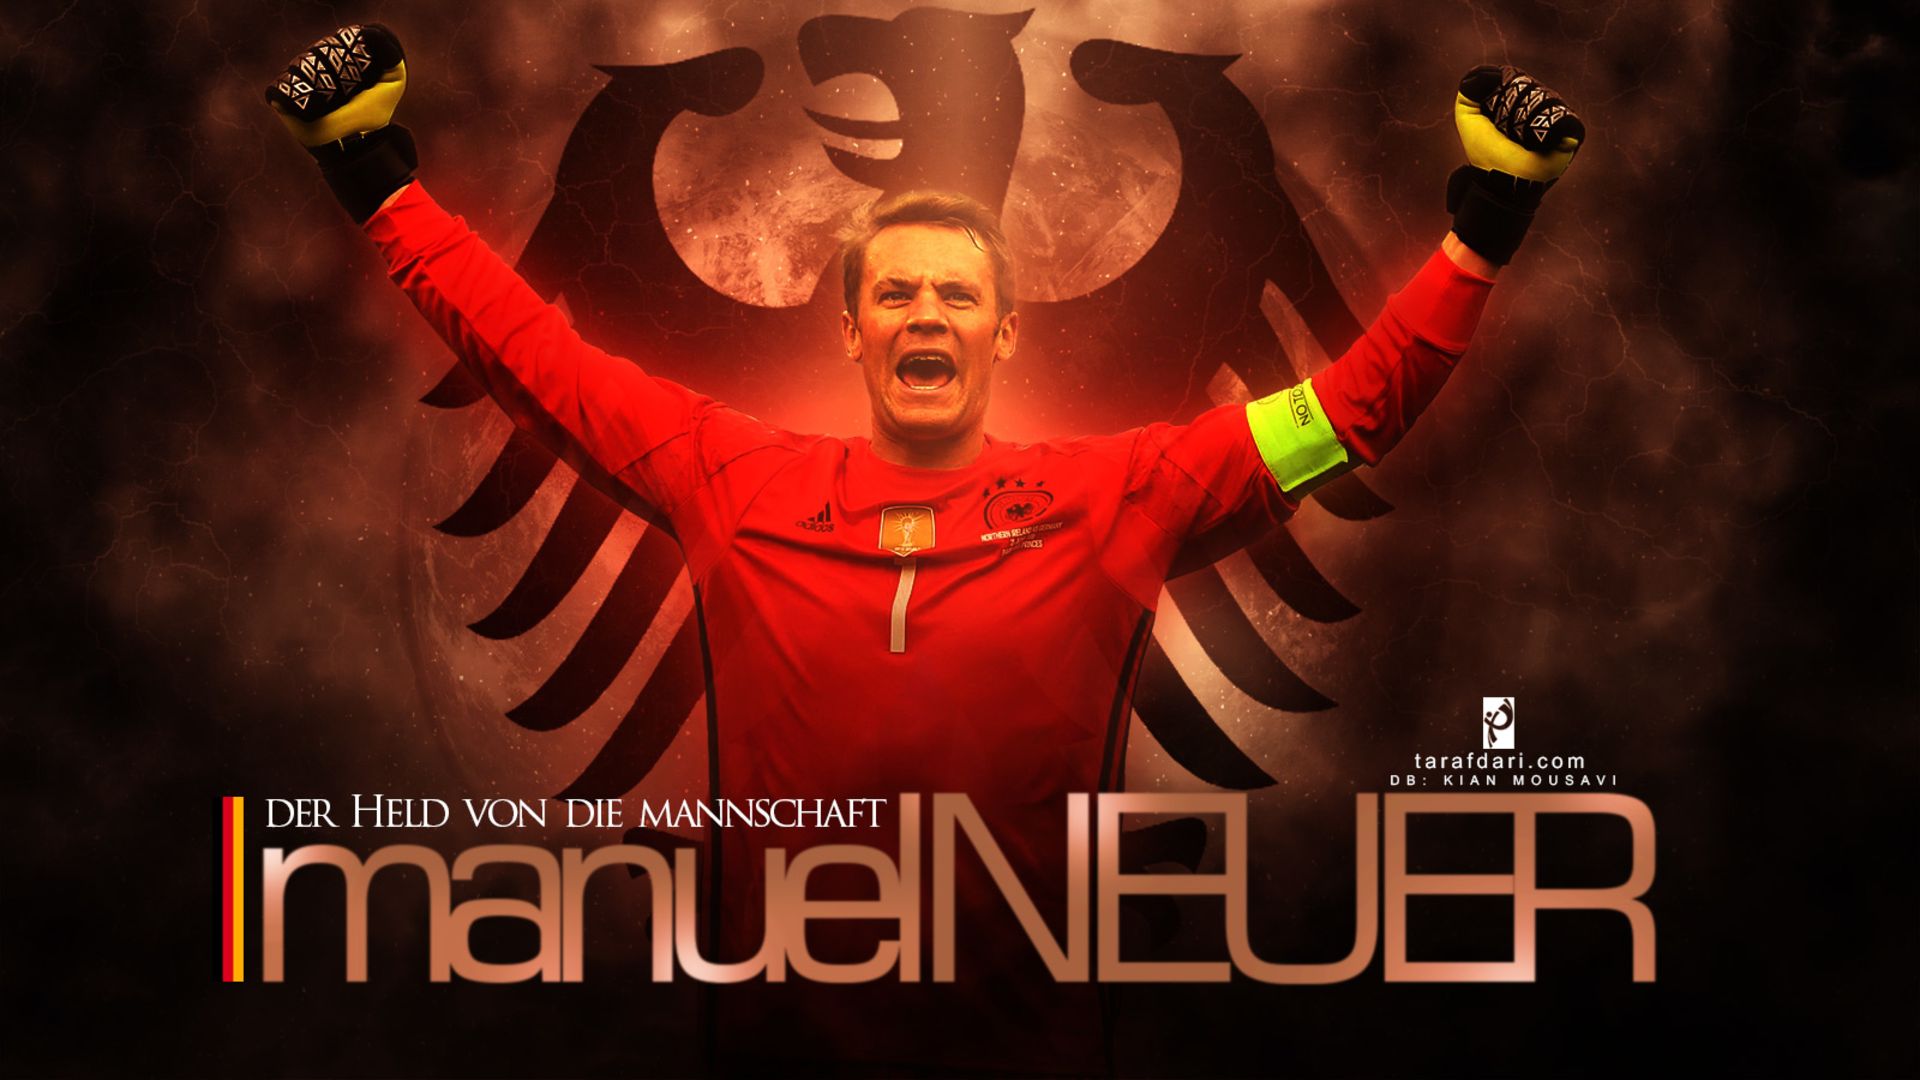 manuel neuer, sports, germany national football team, soccer